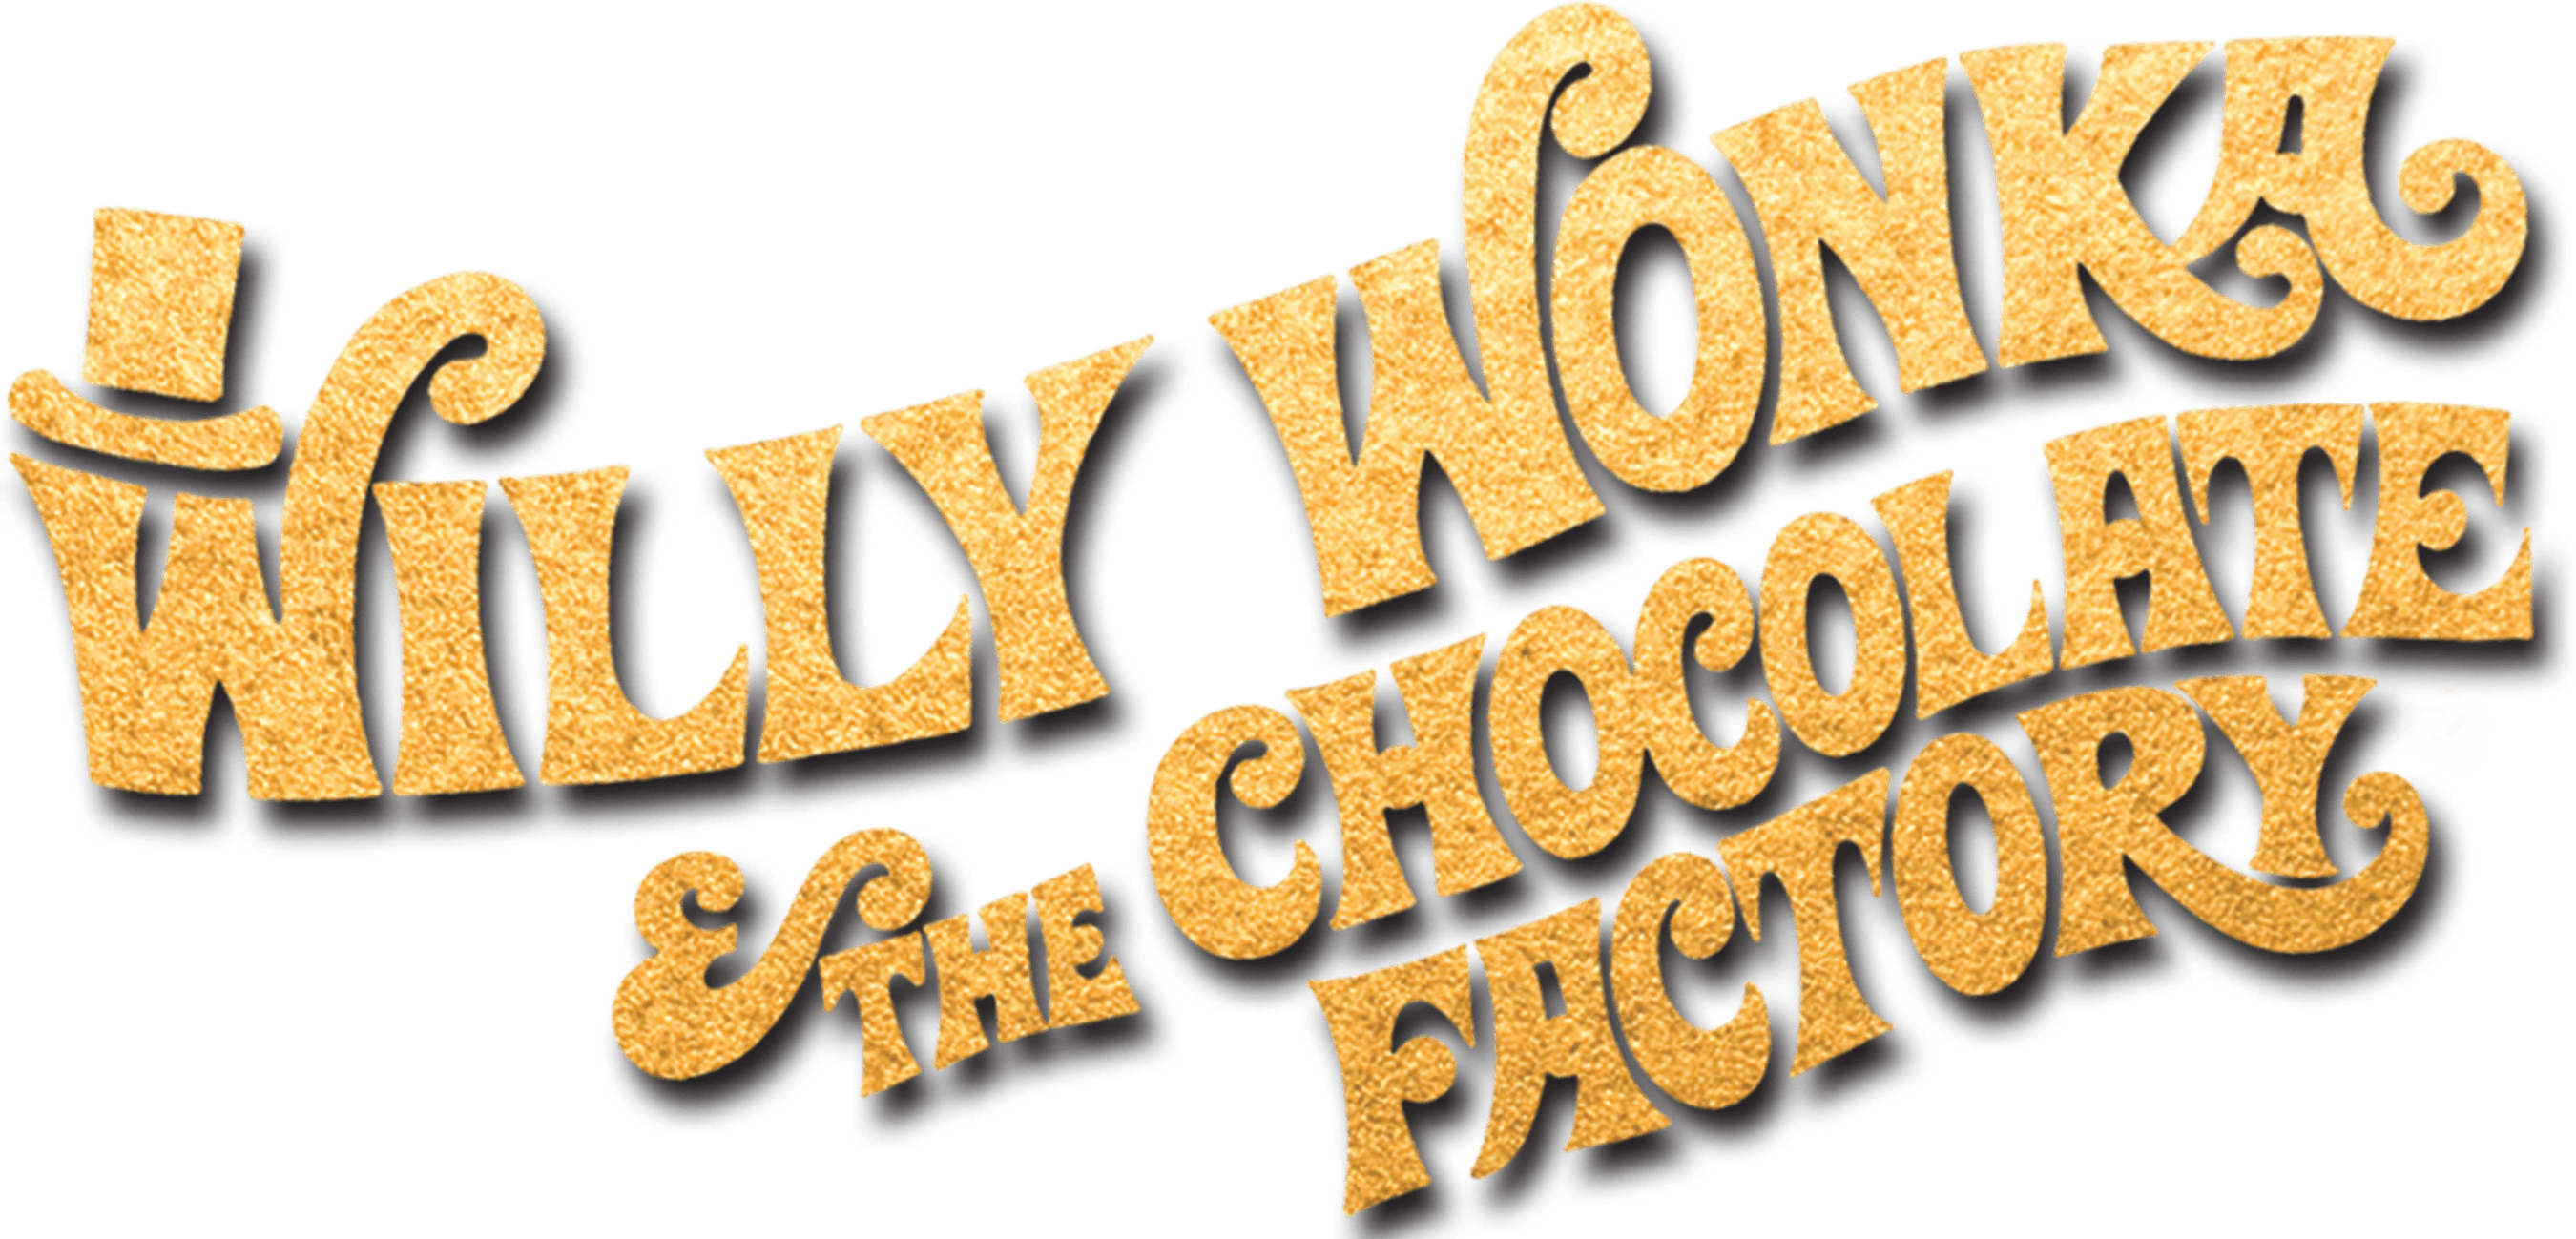 Willy Wonka & the Chocolate Factory logo